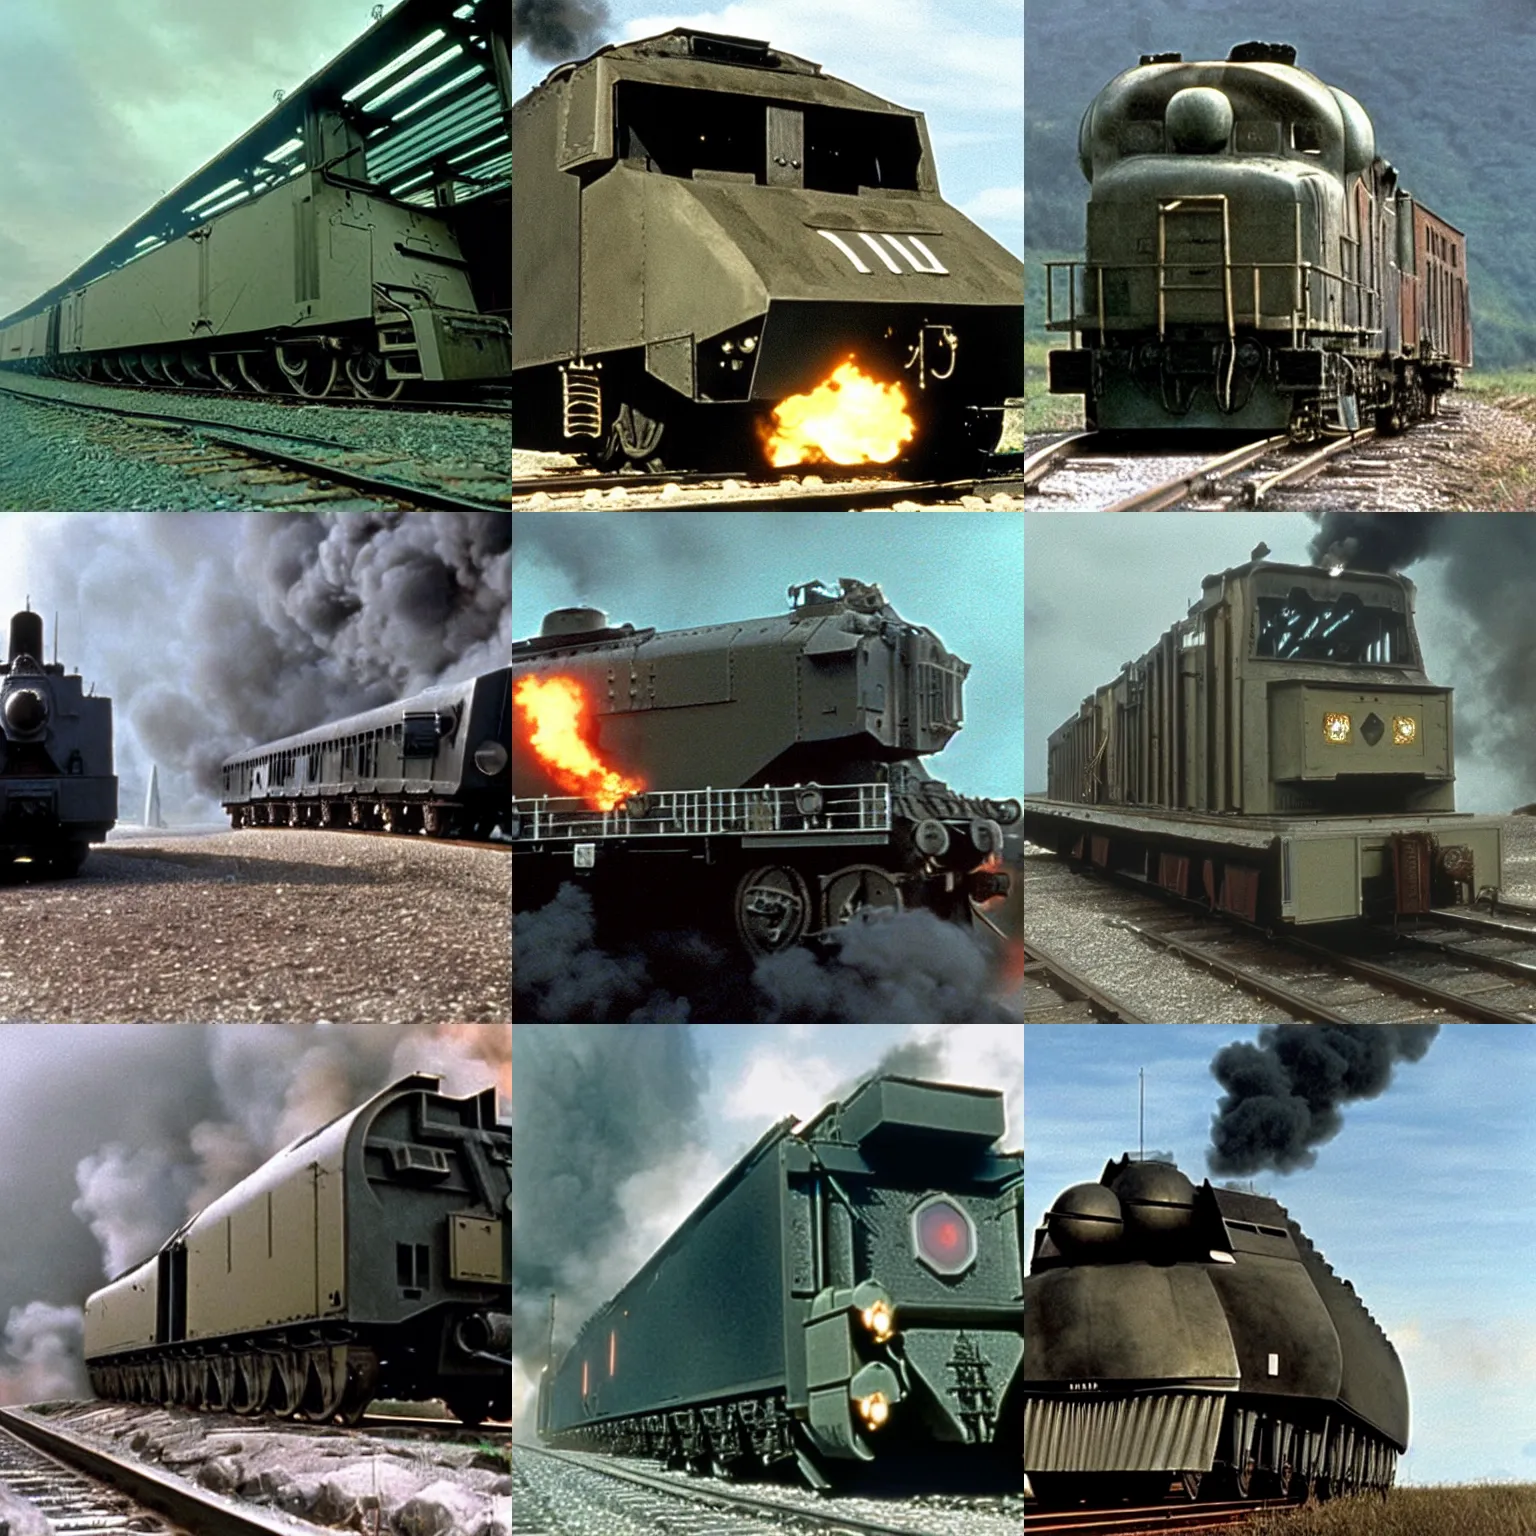 Prompt: An armoured train, film still from James Bond movie Goldeneye (1999)